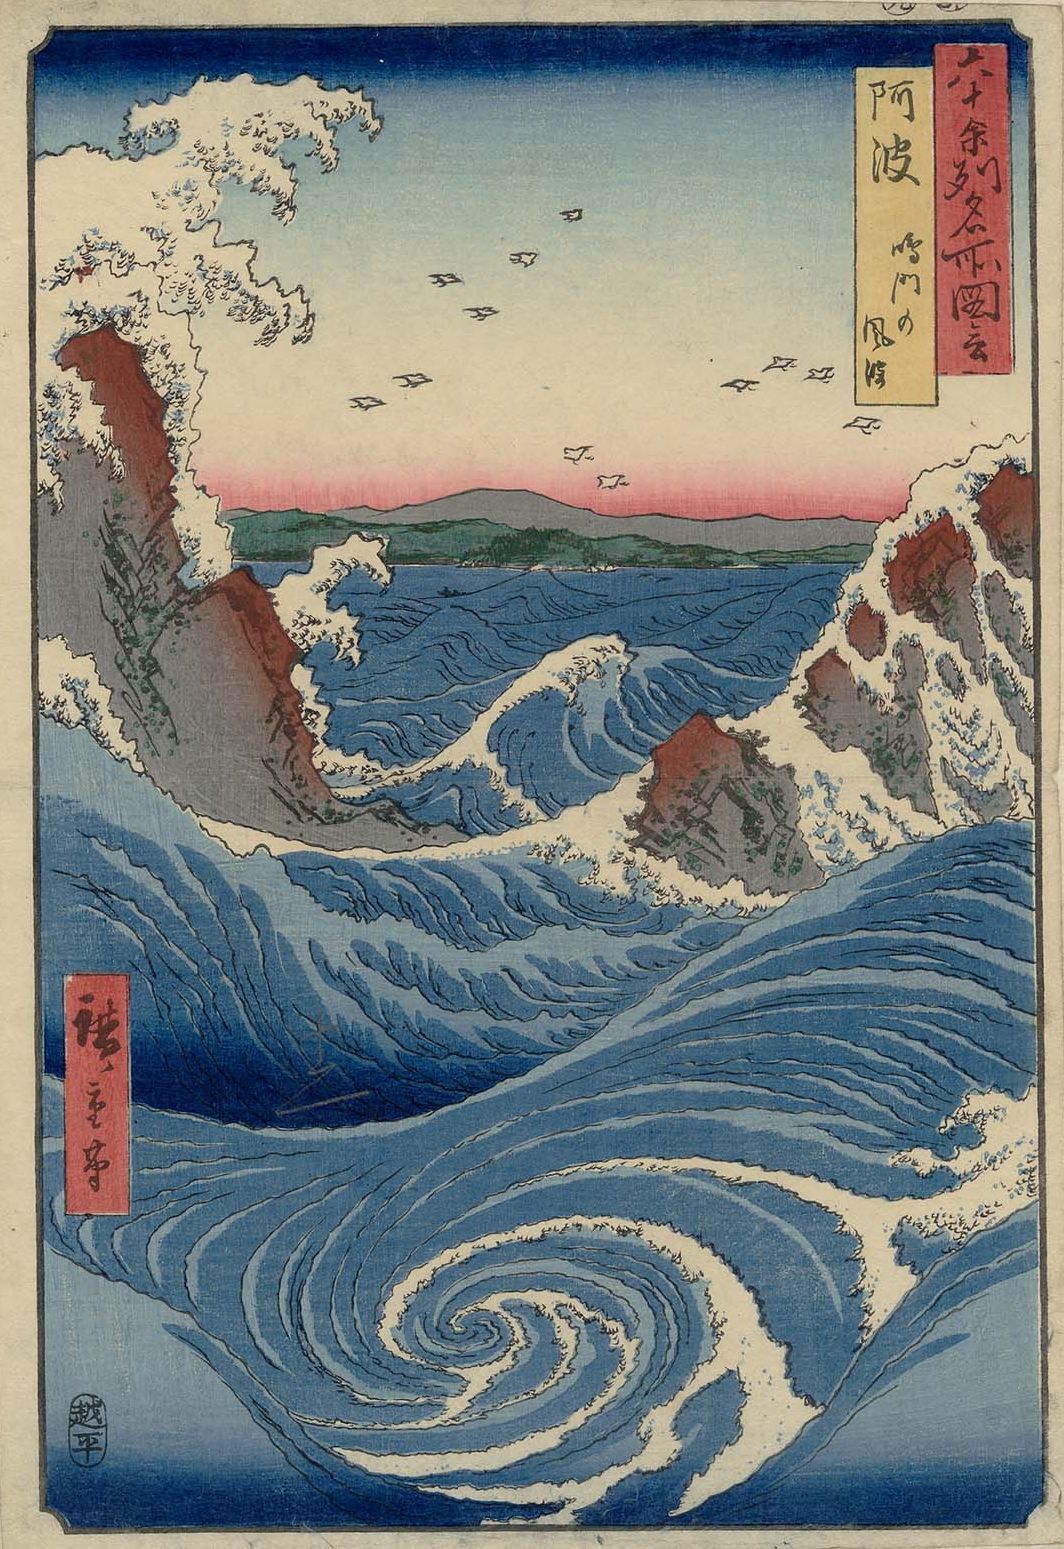 De Naruto draaikolk by Utagawa Hiroshige - 1856 - 35,6 x 24,4 cm 